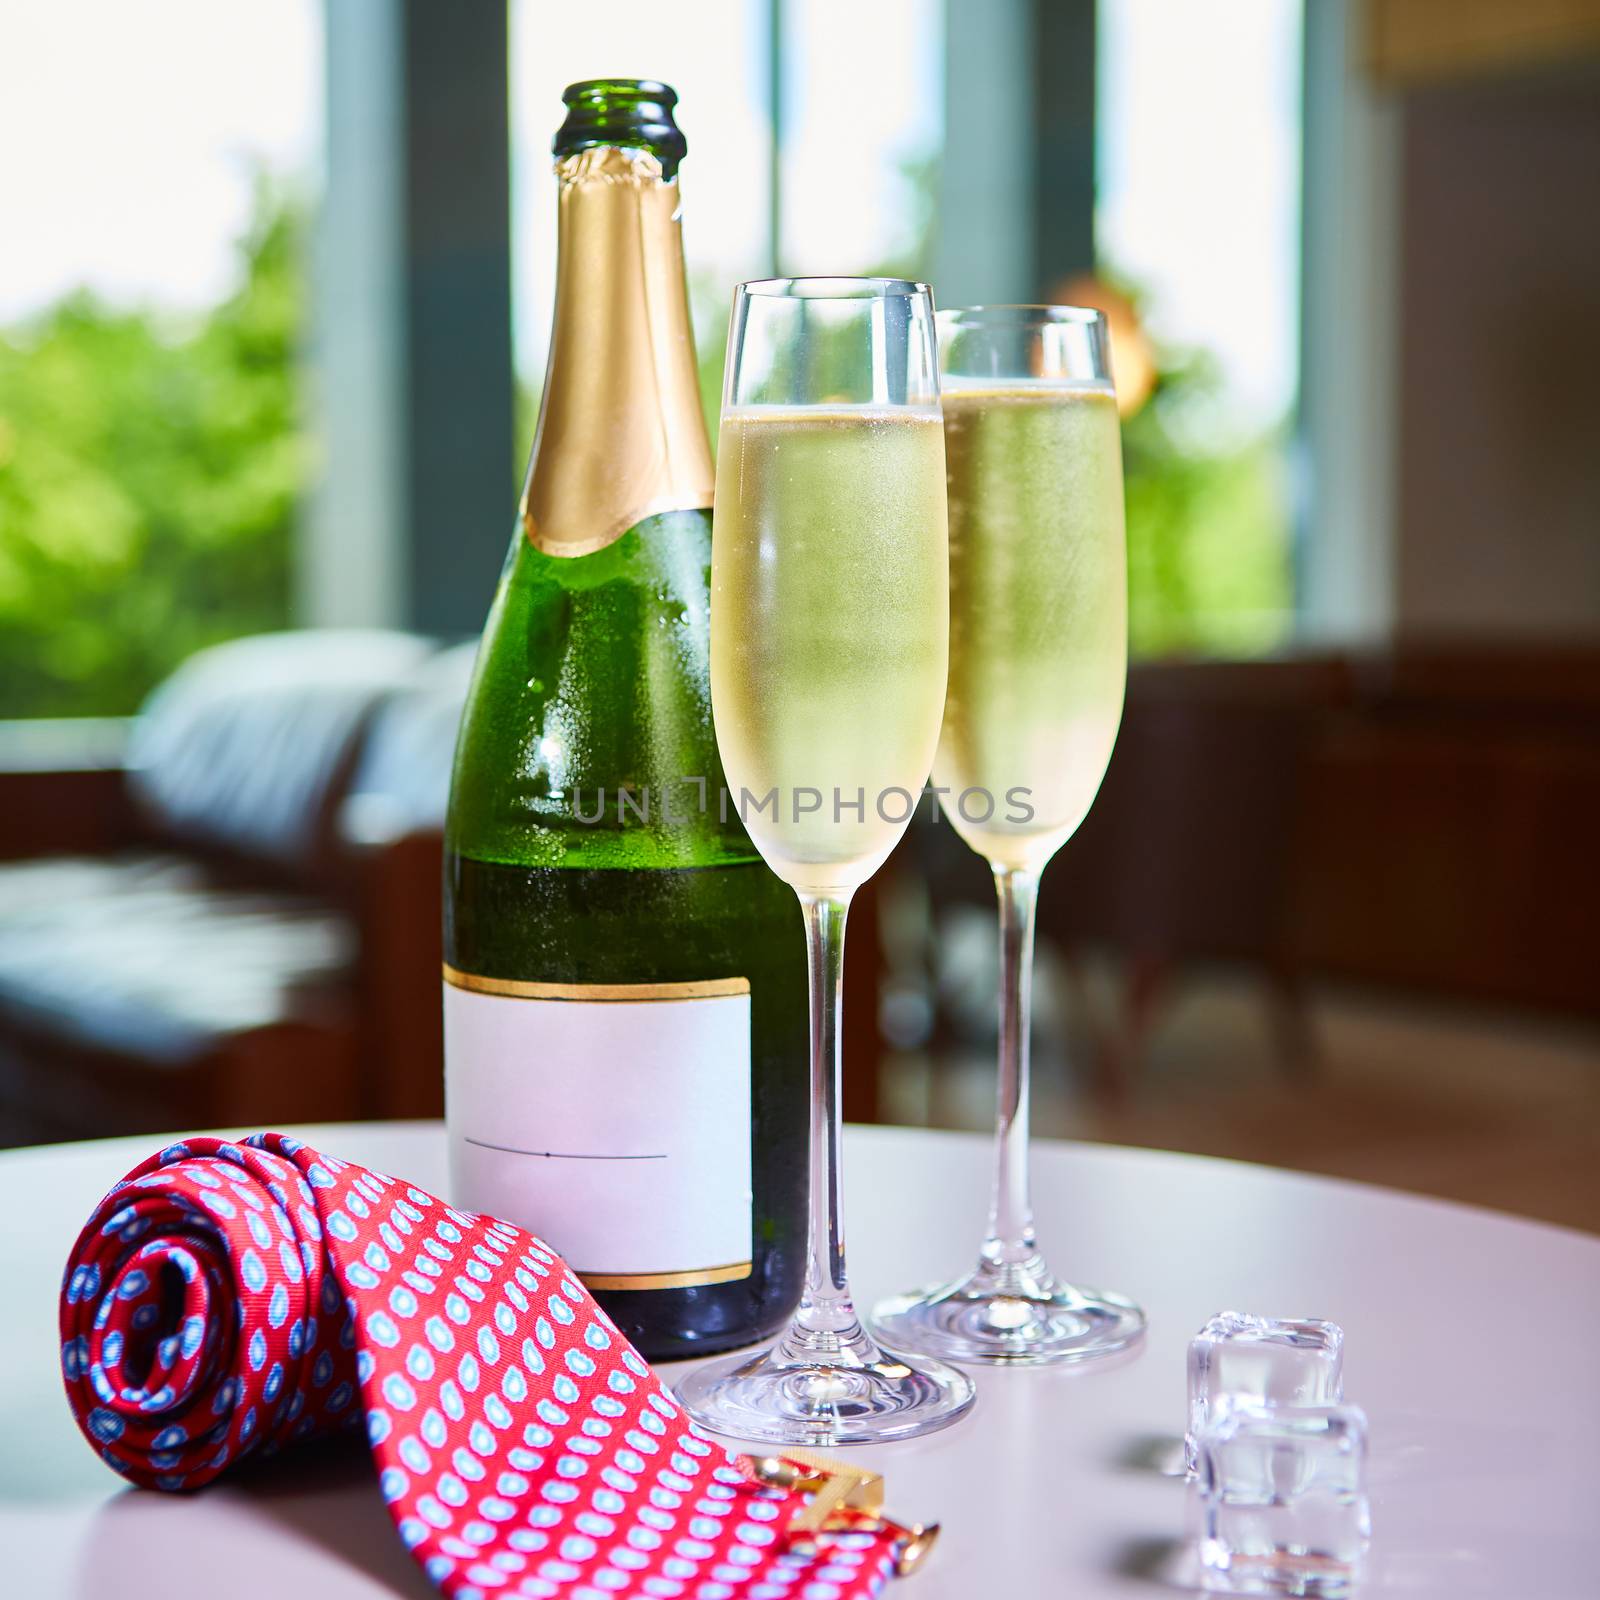 Two elegant champagne glasses on the background of green bottle. Festive still life.